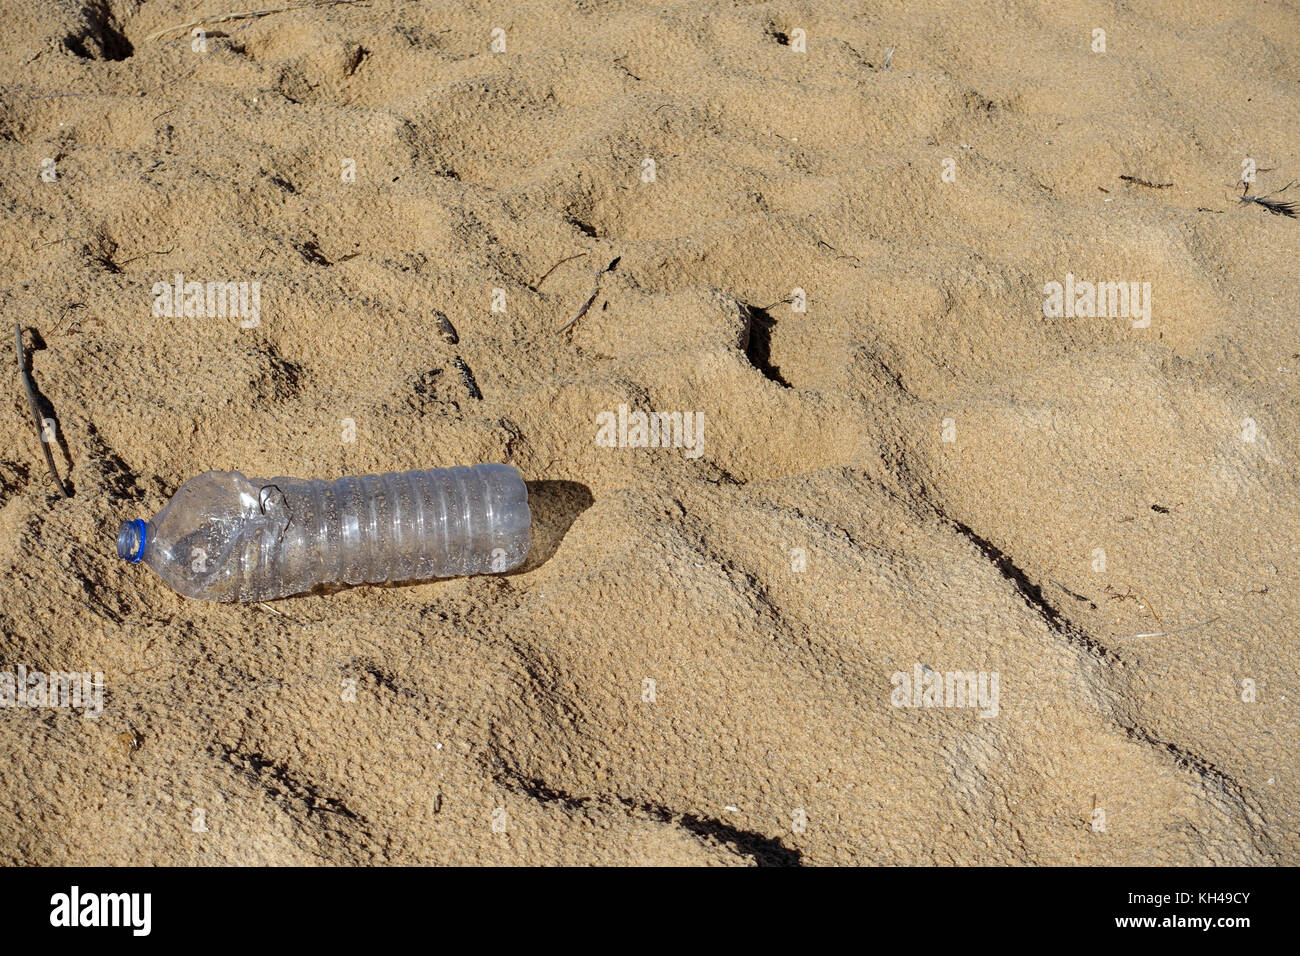 Empty plastic bottle lying on the beach Stock Photo